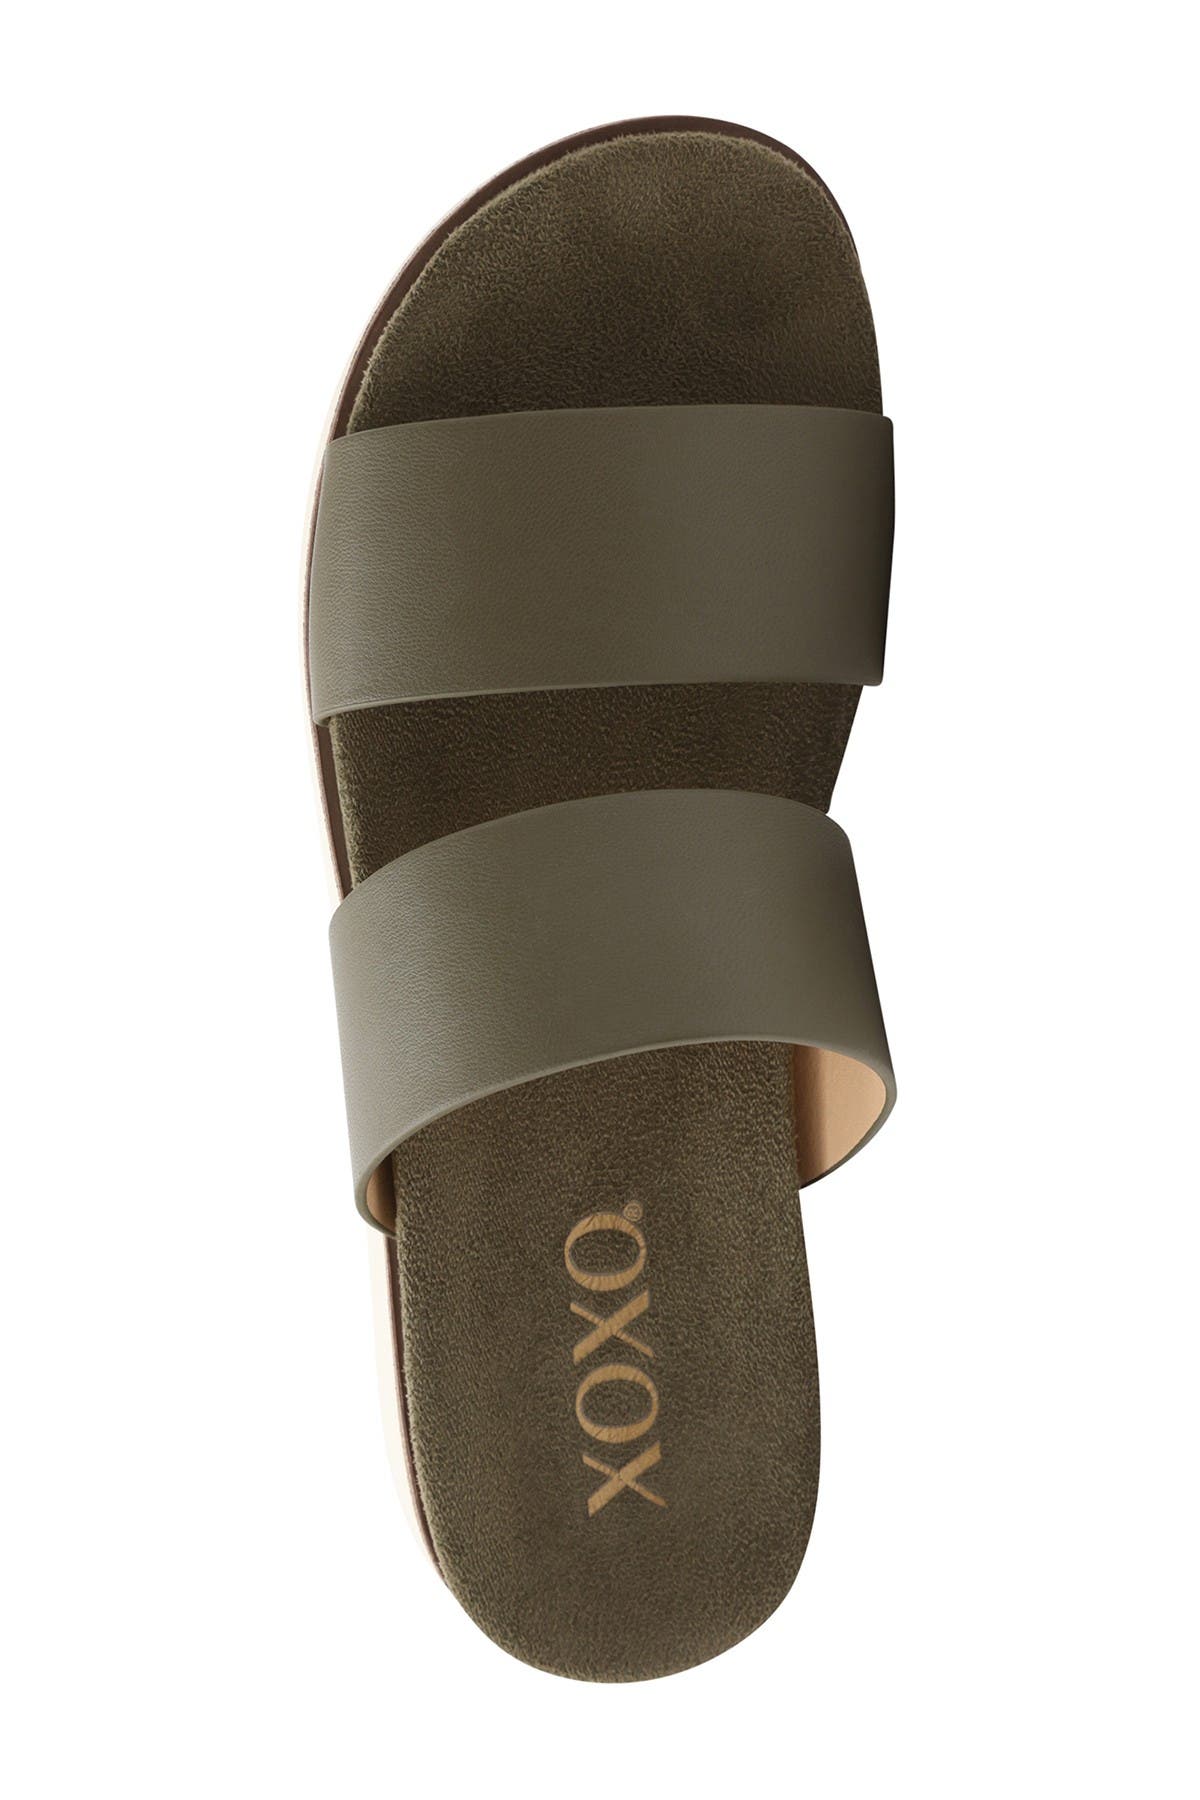 xoxo women's dylan platform sandal